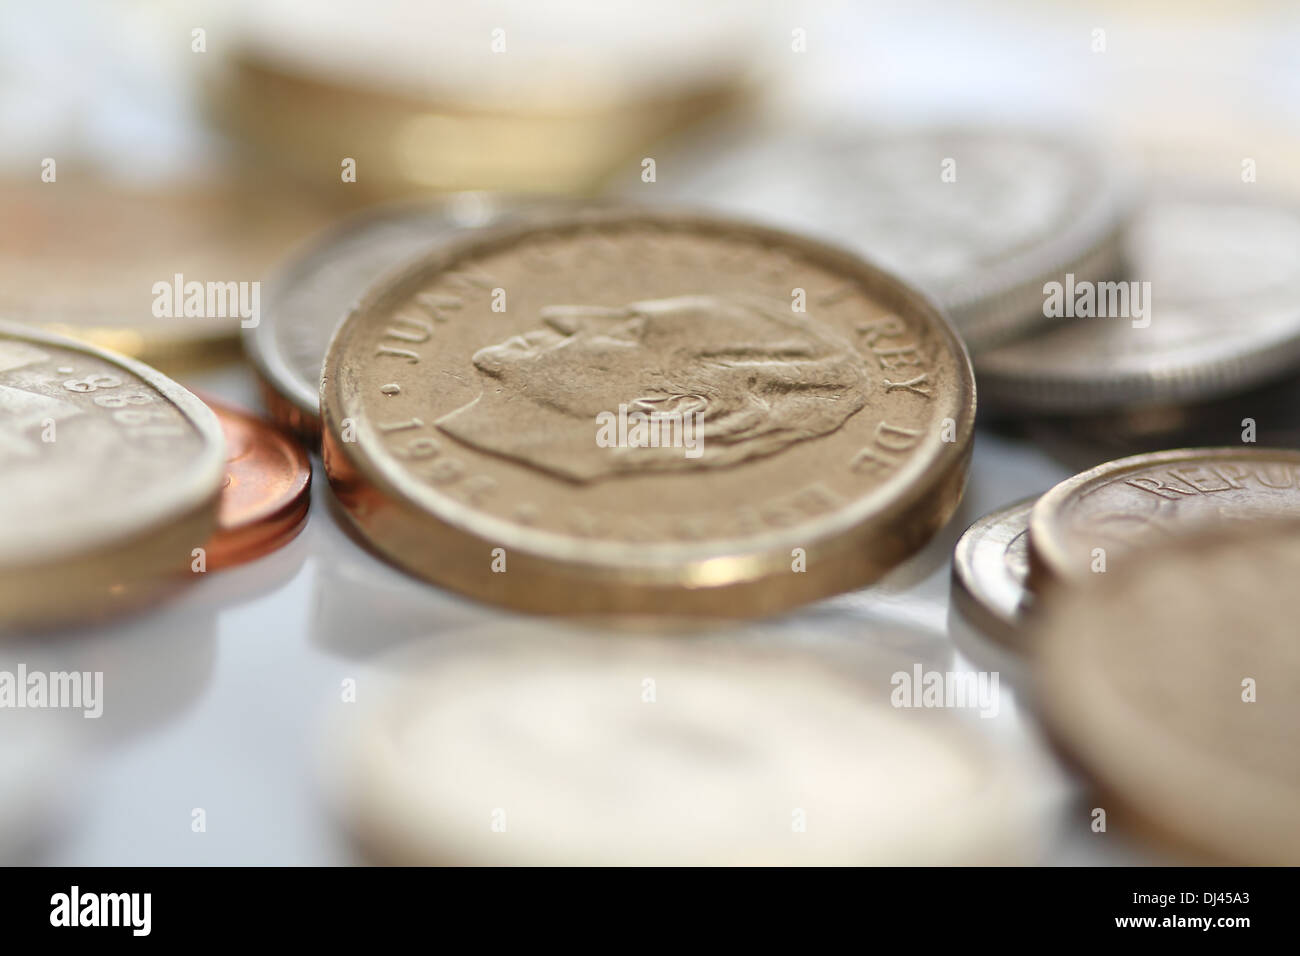 Spanish peseta coins Stock Photo